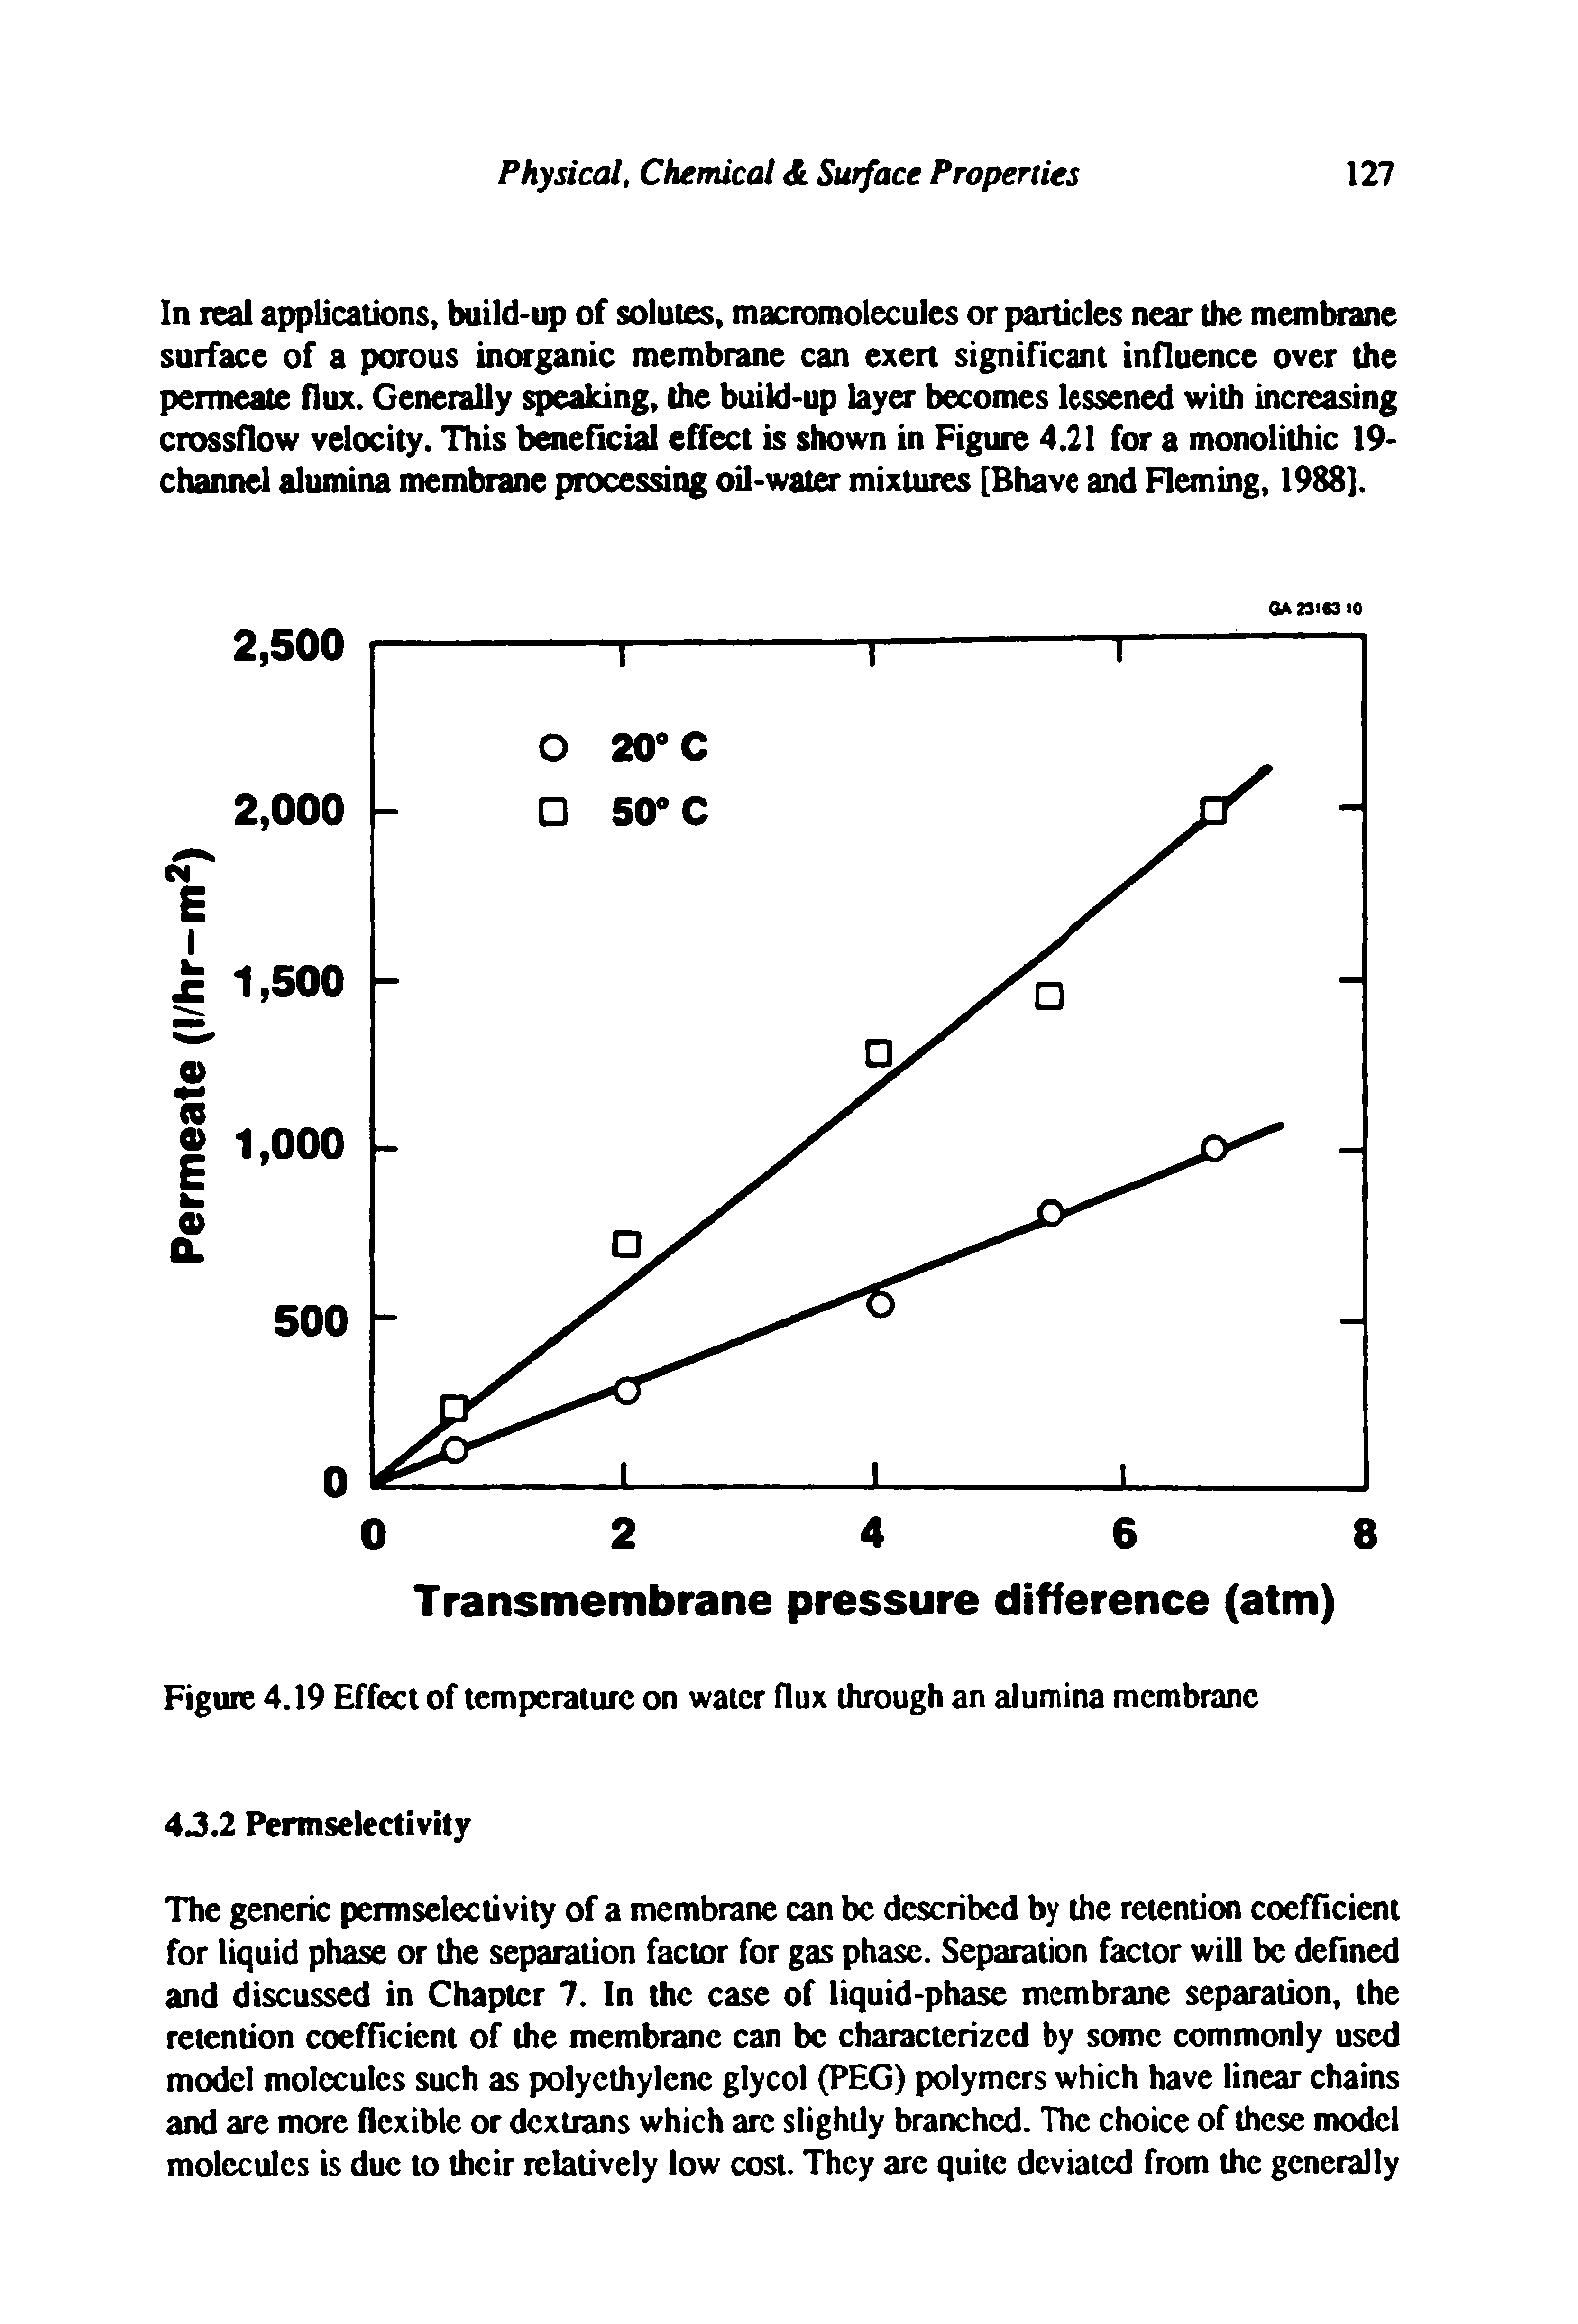 Figure 4.19 Effect of temperature on water flux through an alumina membrane...